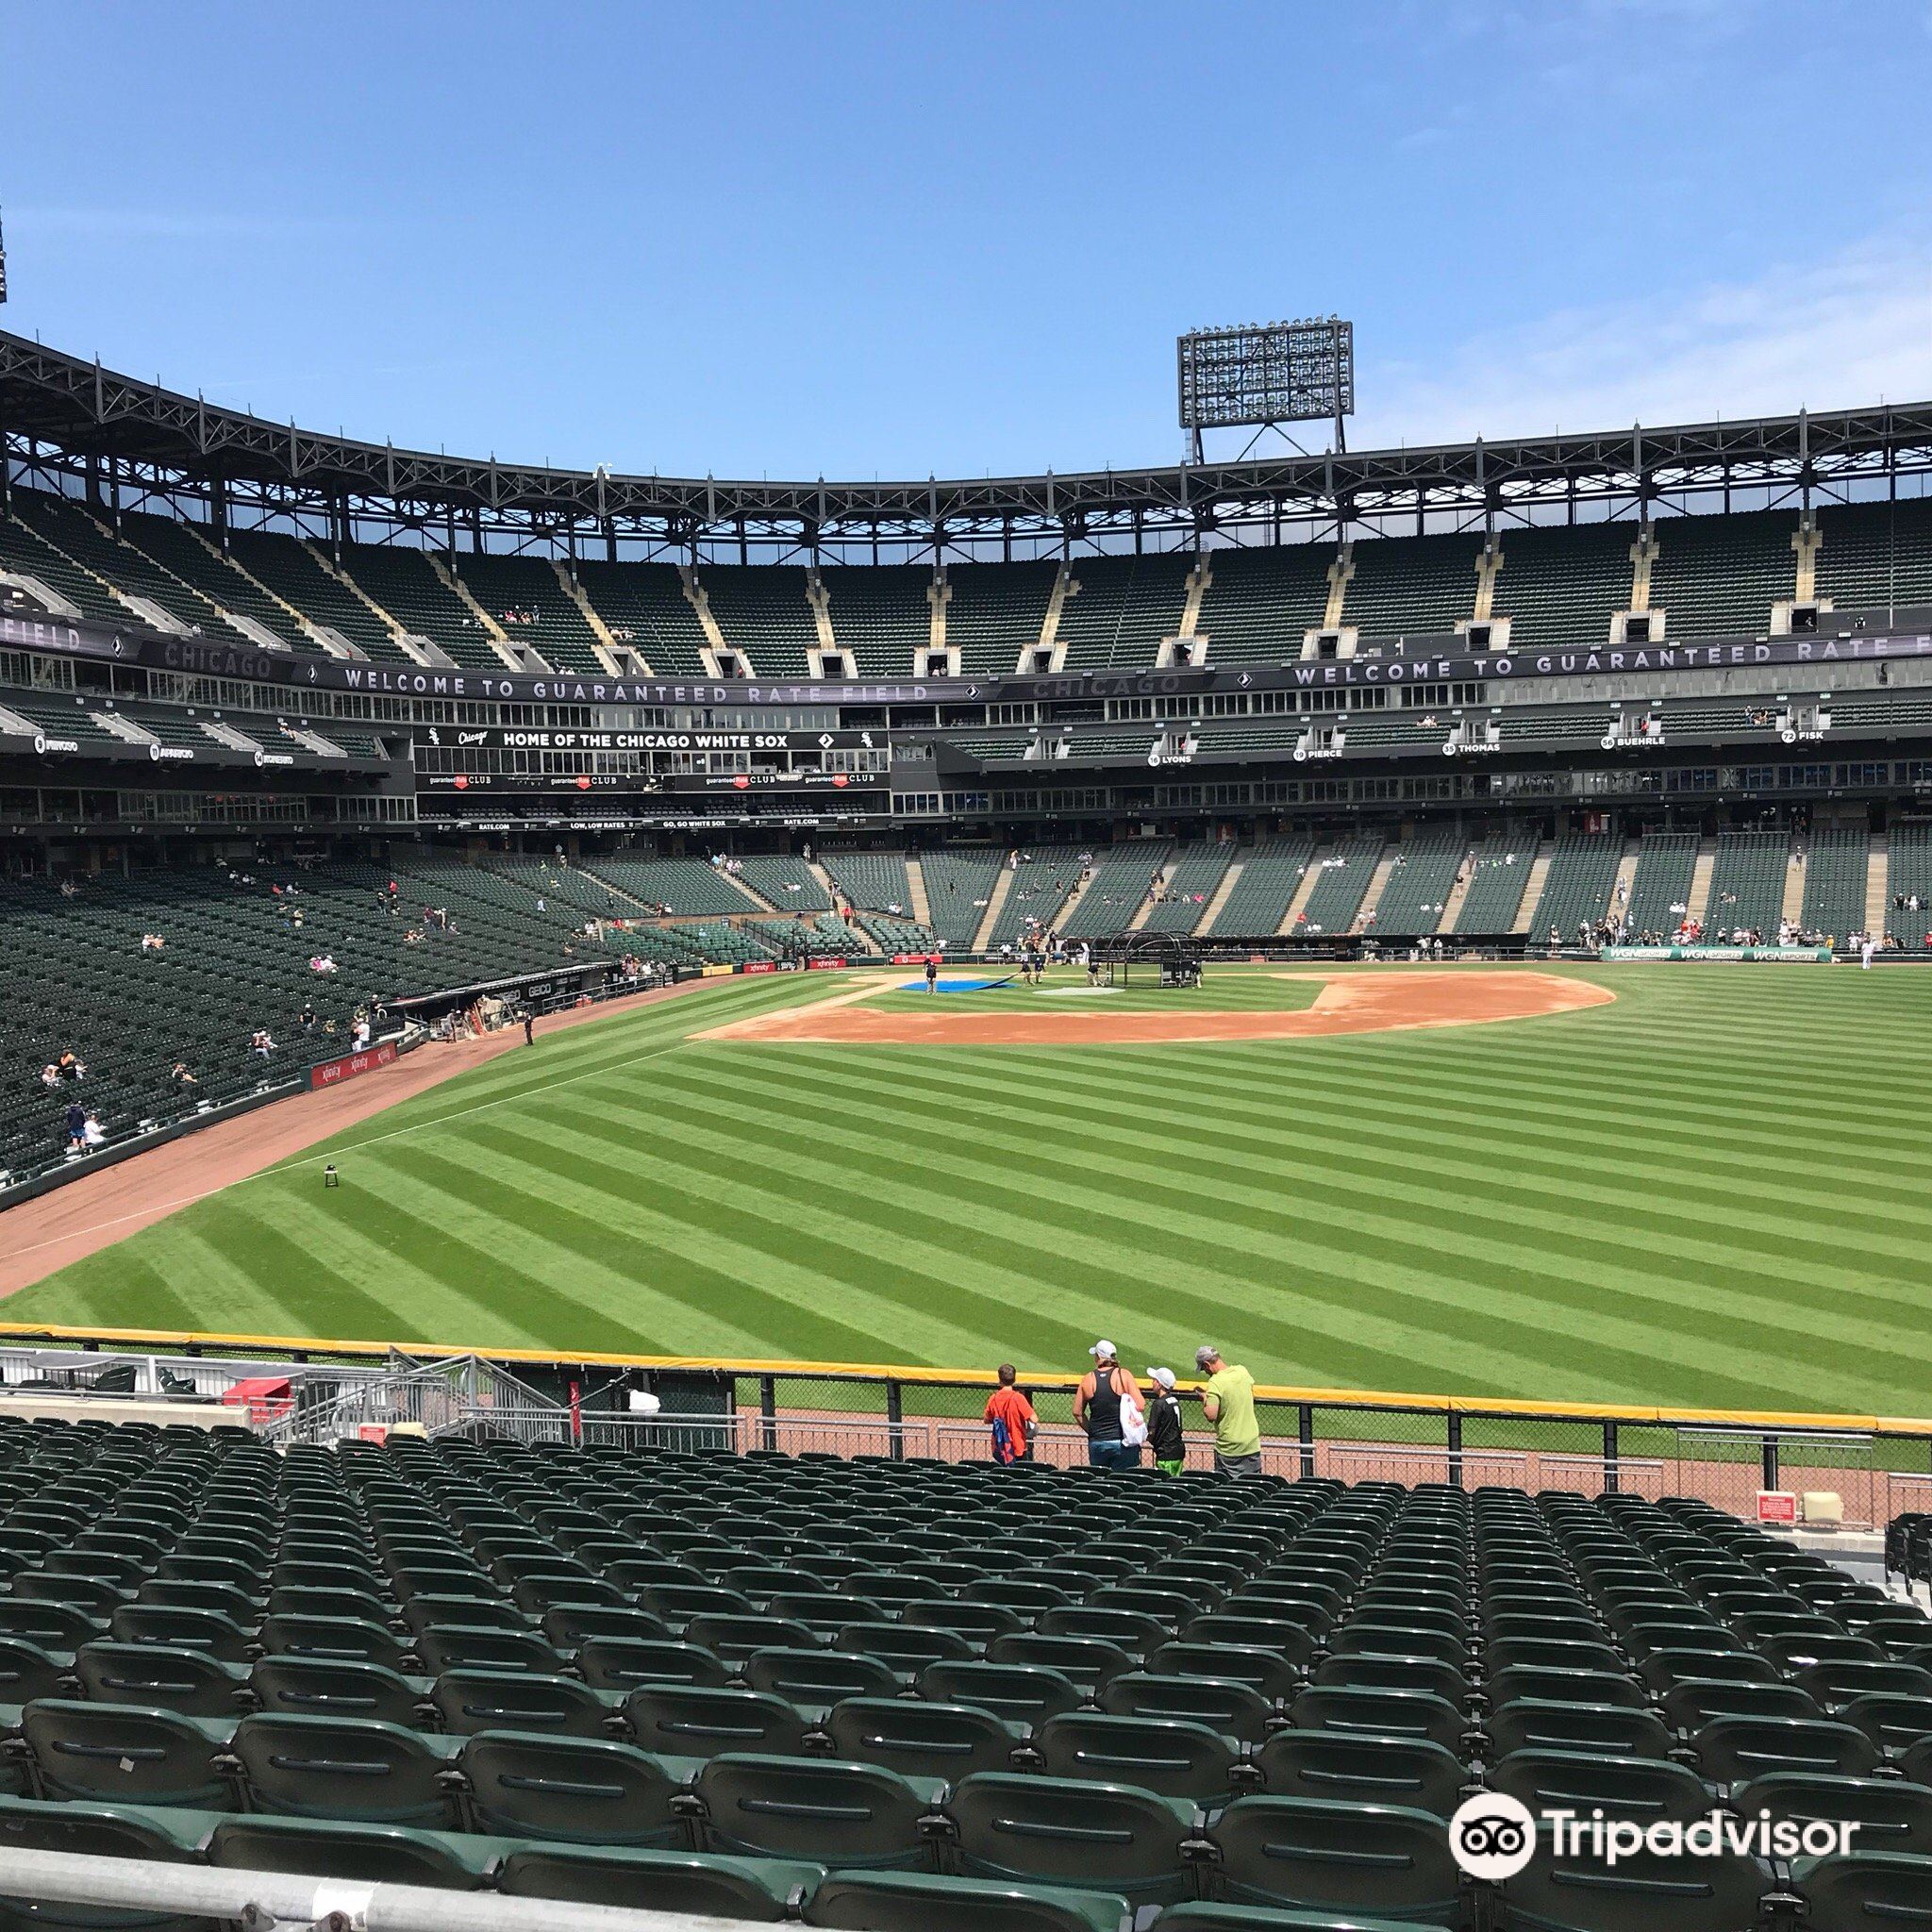 White Sox Stadium Chicago Canvas Guaranteed Rate Field -  Hong Kong